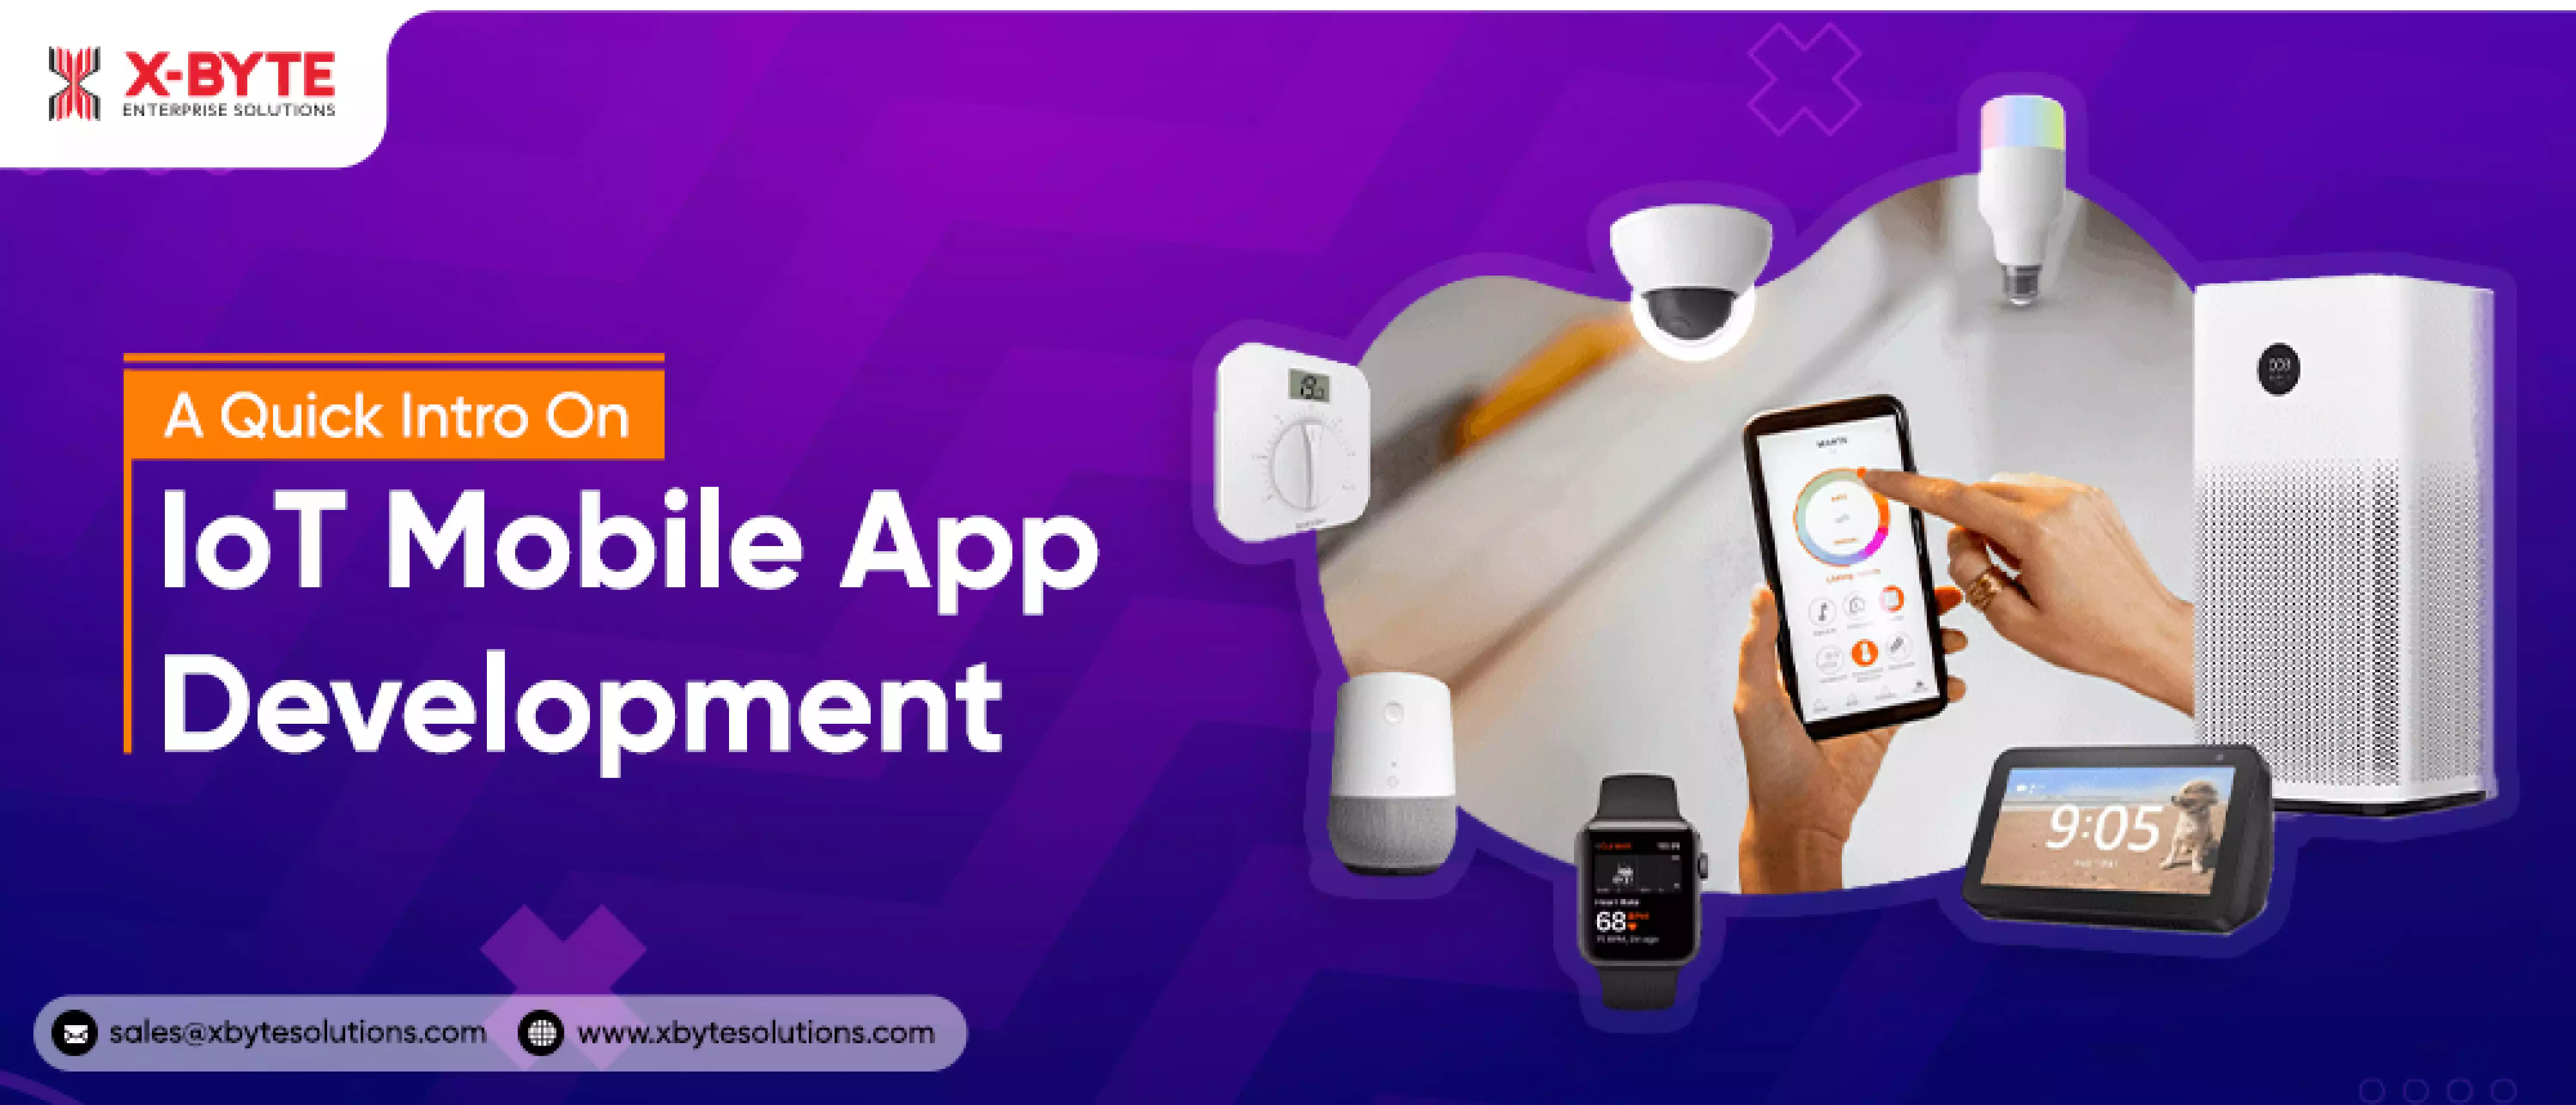 A Quick Intro On IoT Mobile App Development